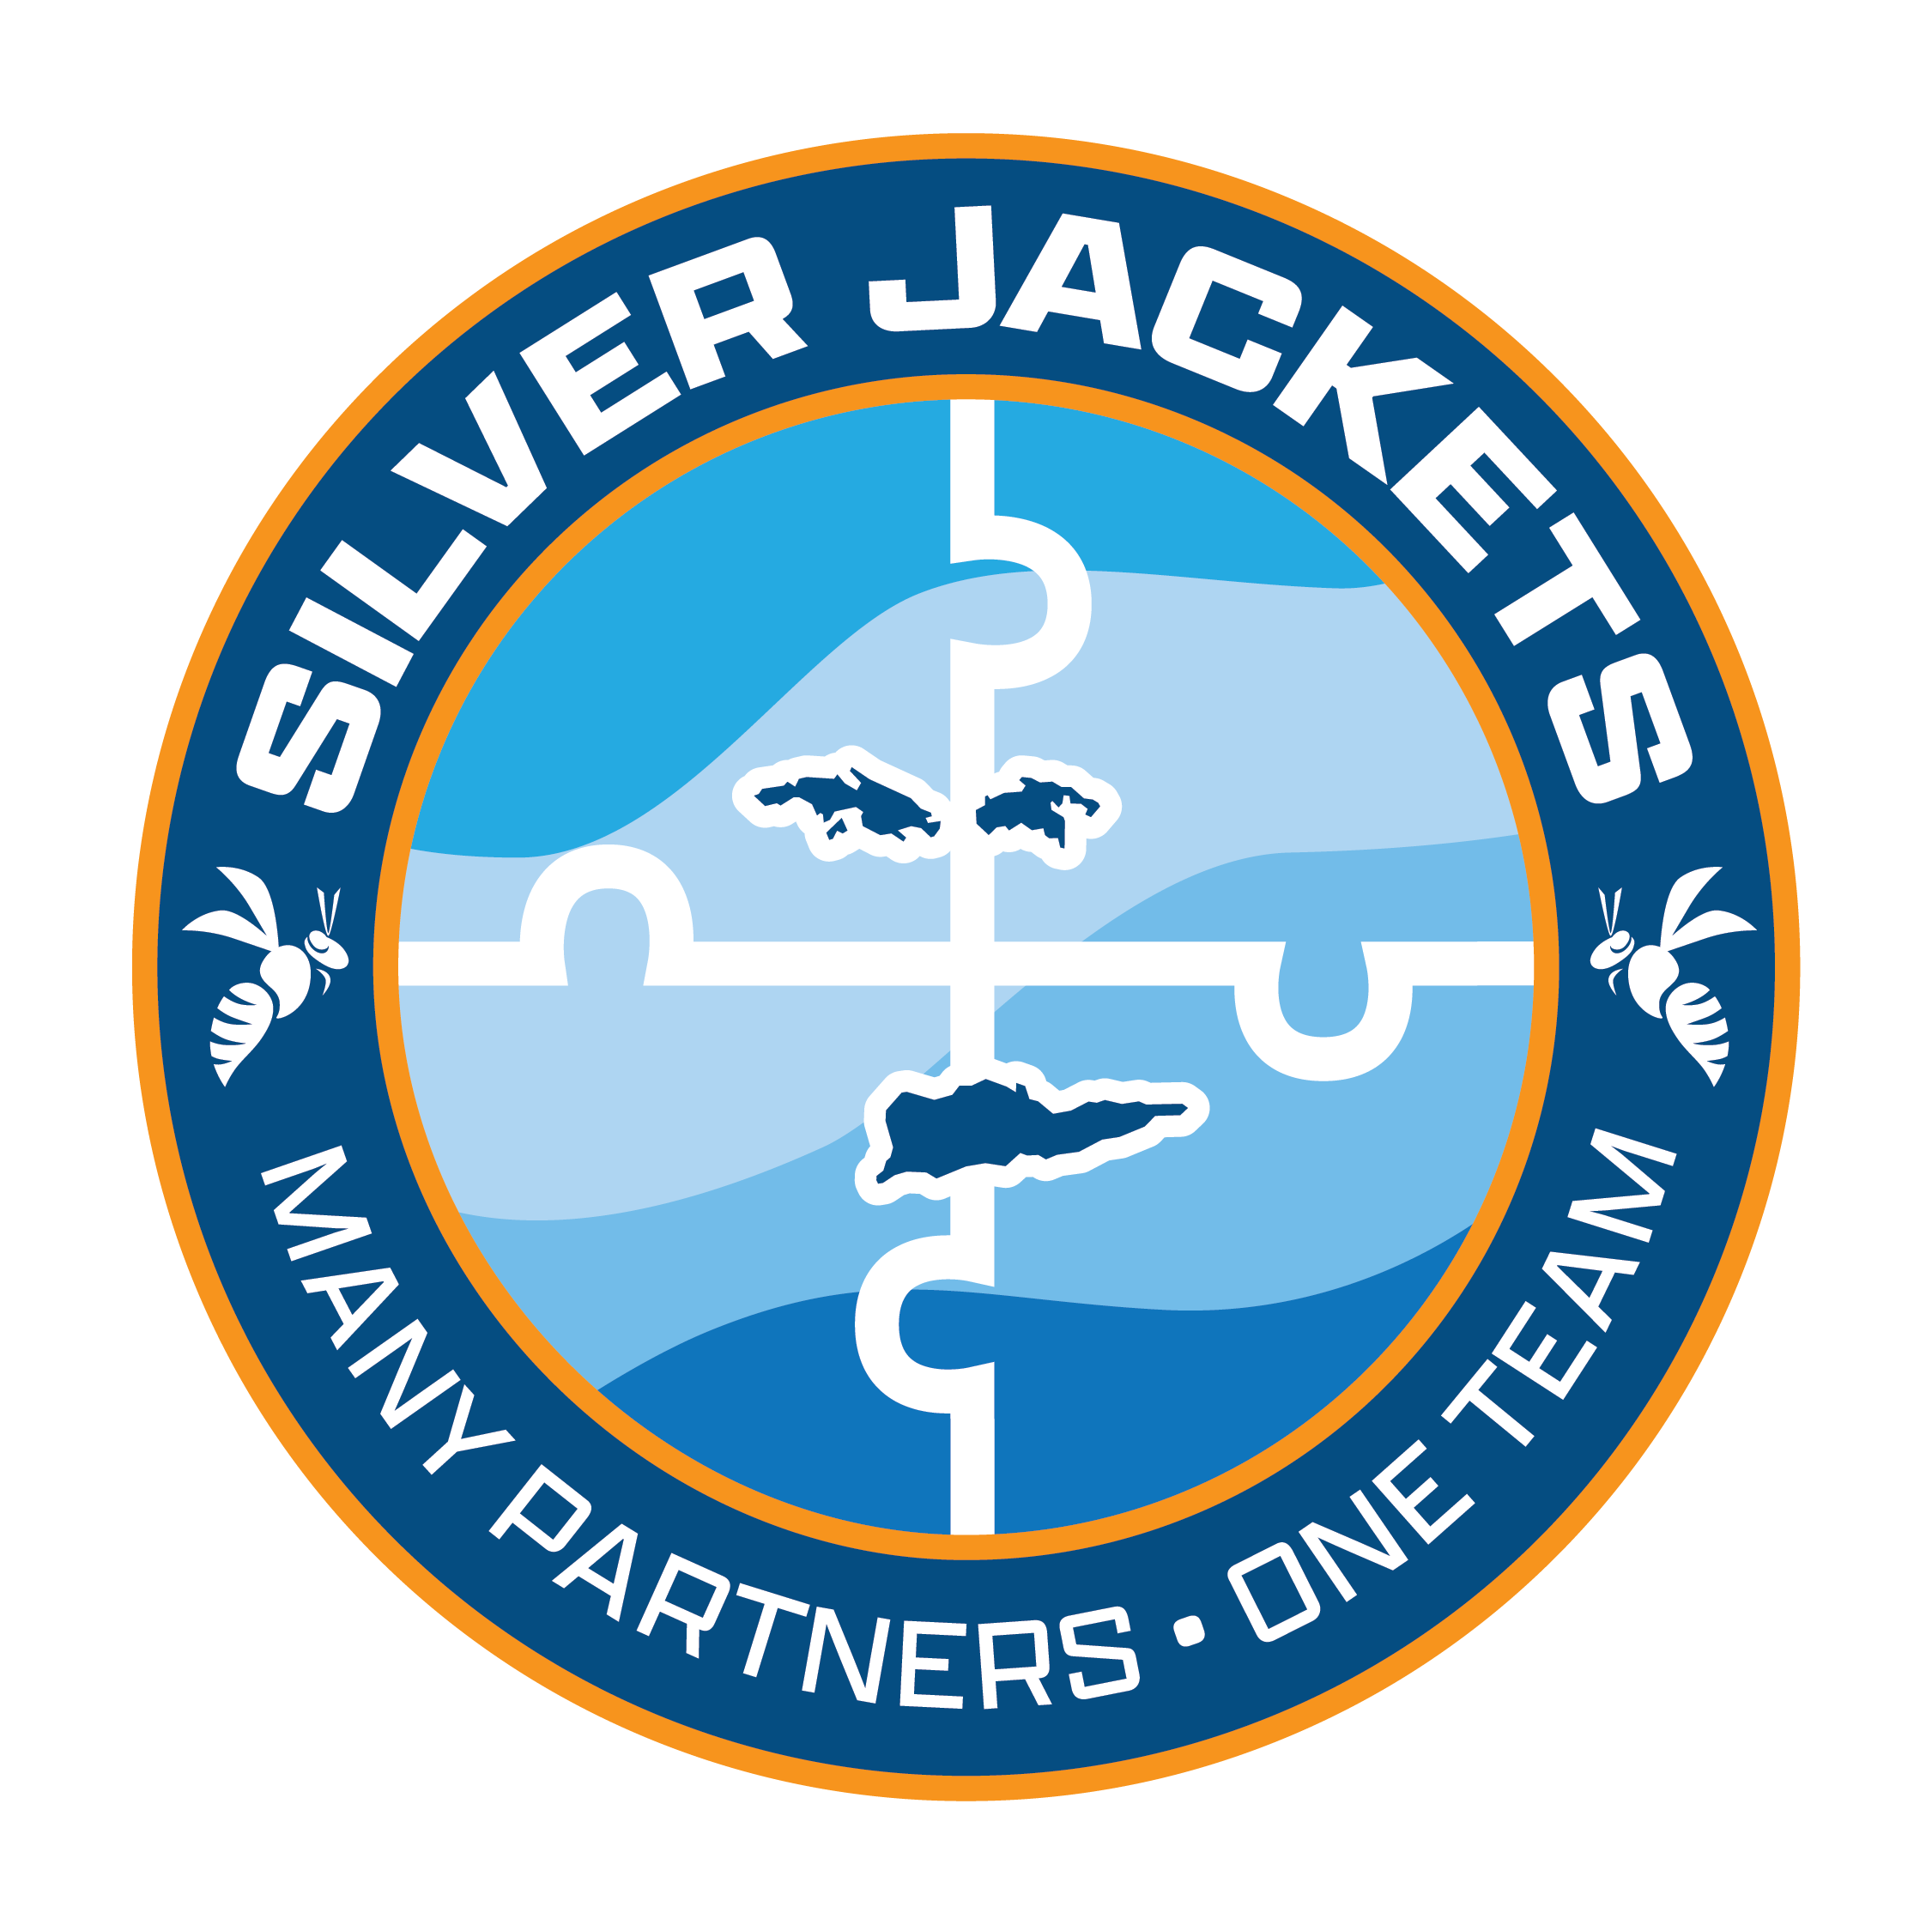 U.S. Virgin Islands Silver Jackets logo